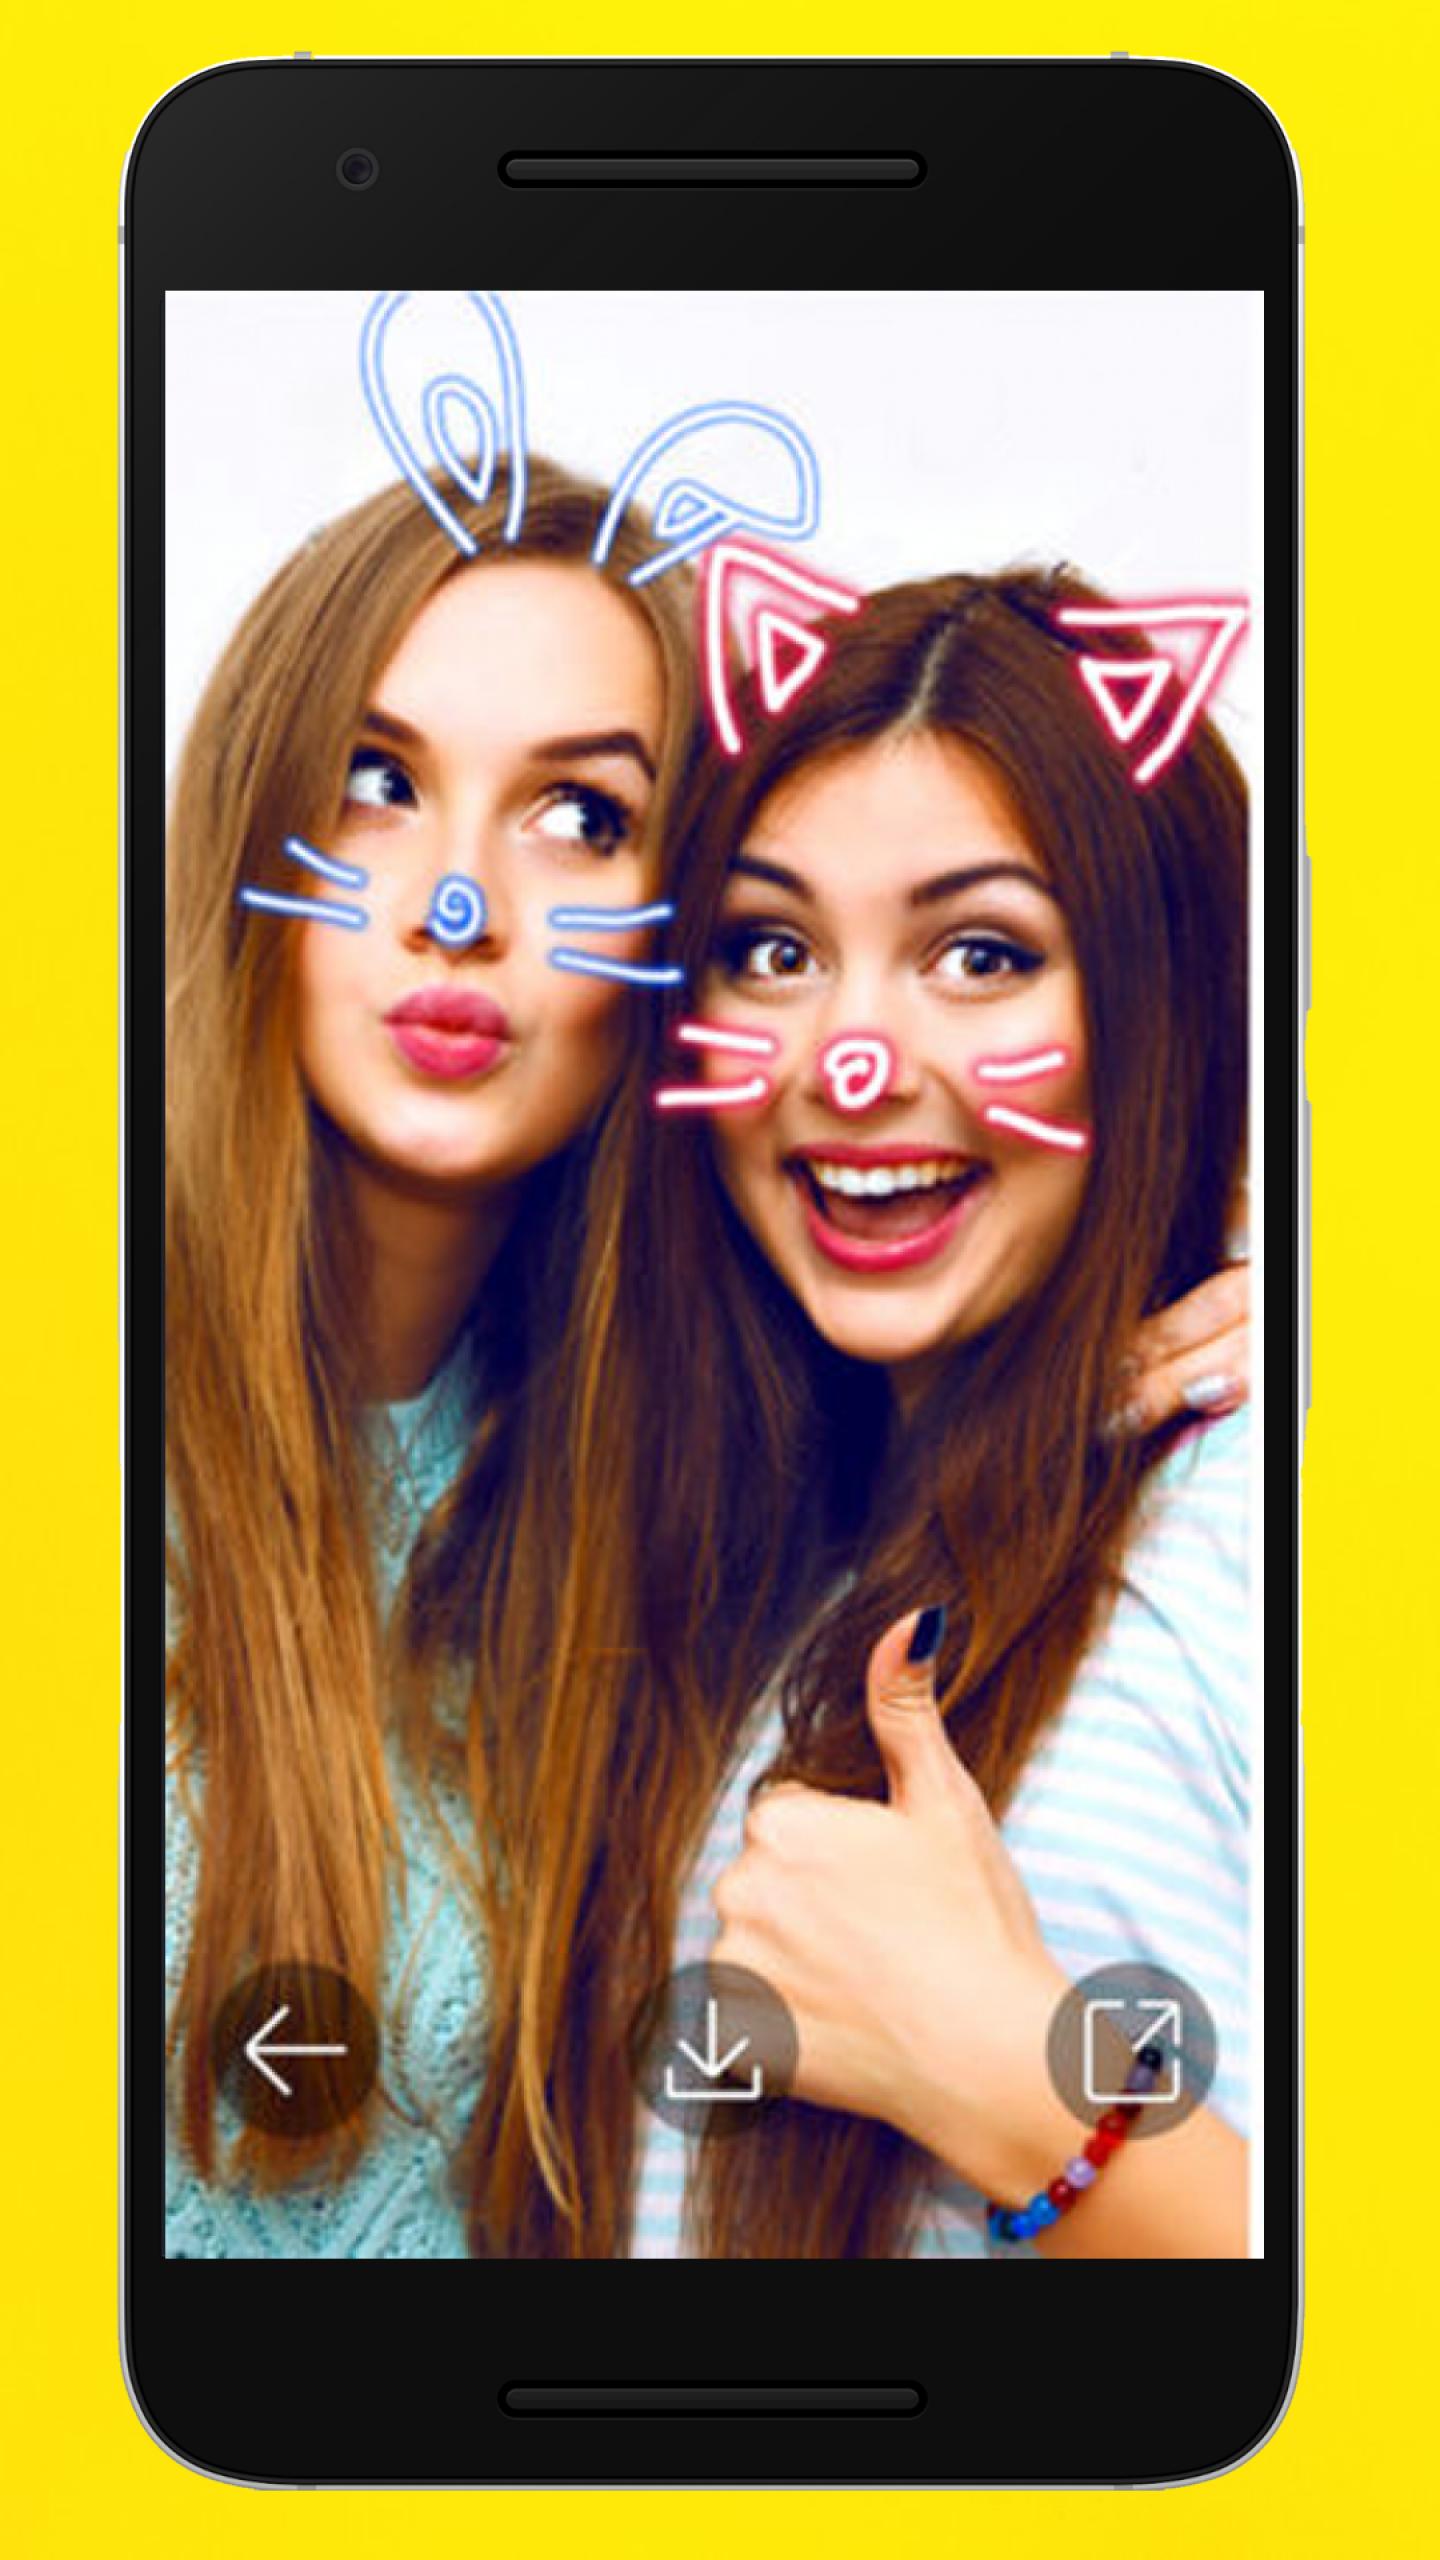 filters for snapchat : sticker design 1.3 Screenshot 2